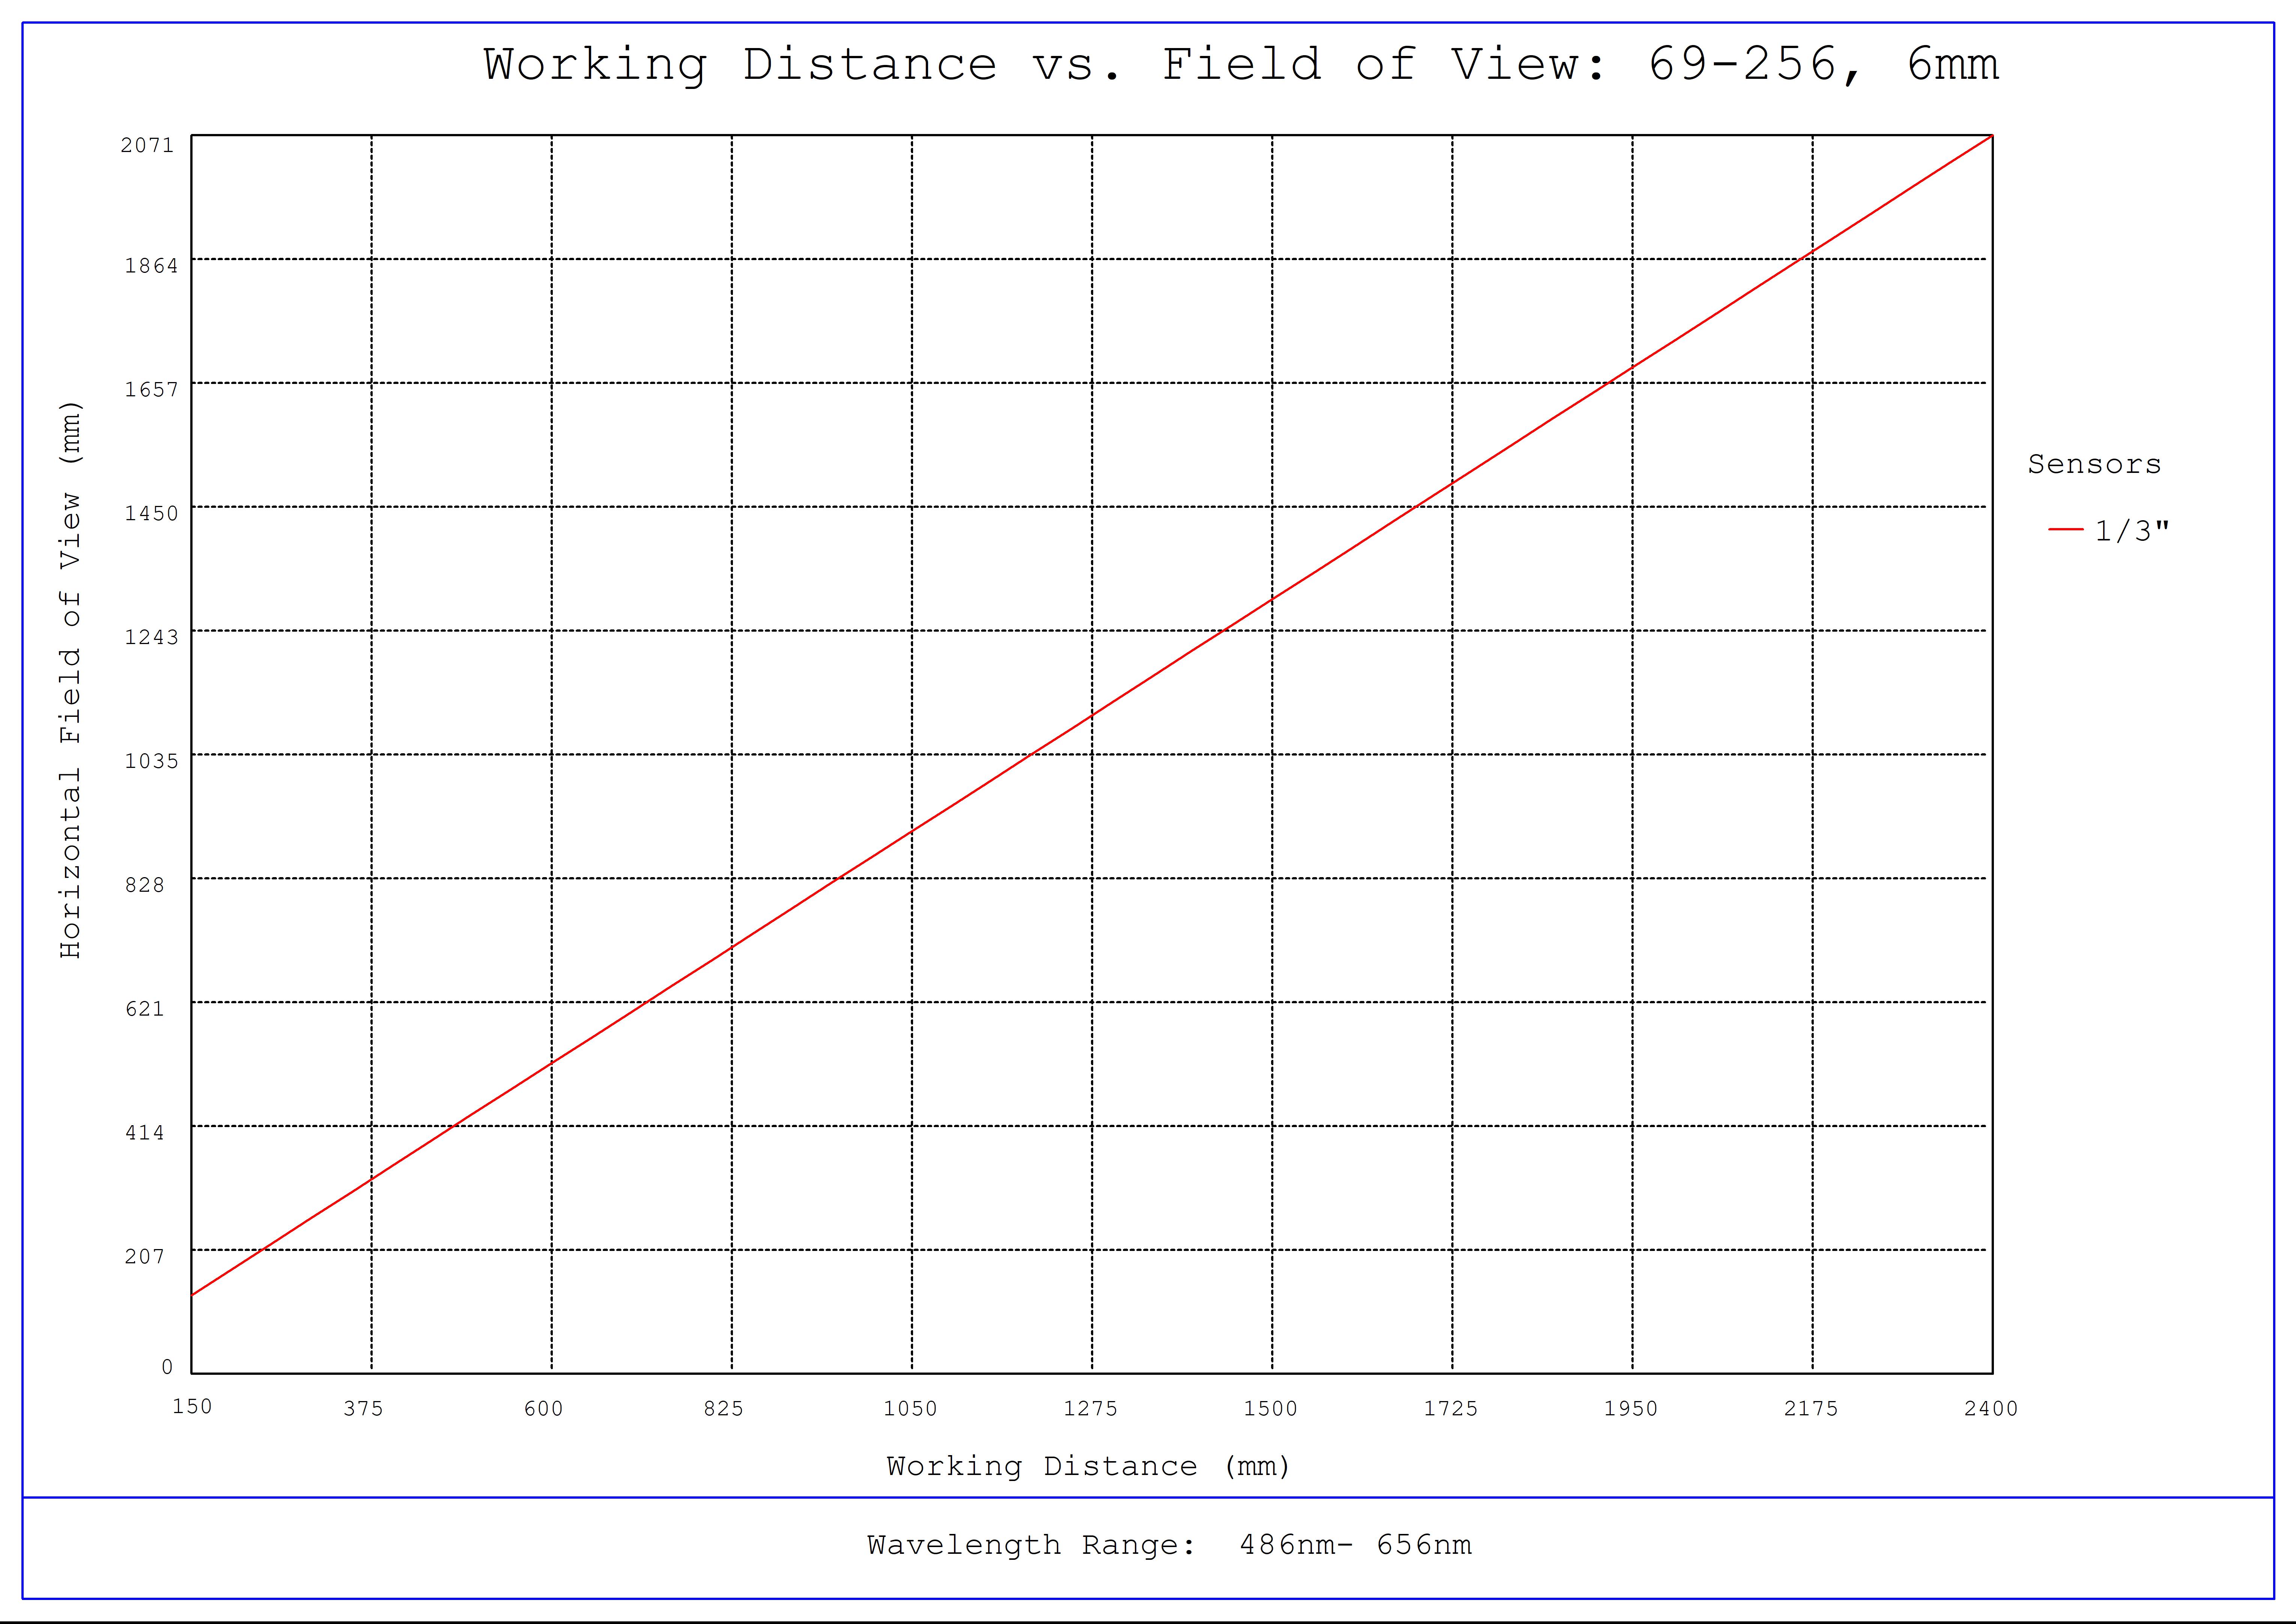 #69-256, f/4, 6mm Focal Length Green Series M12 Lens, Working Distance versus Field of View Plot